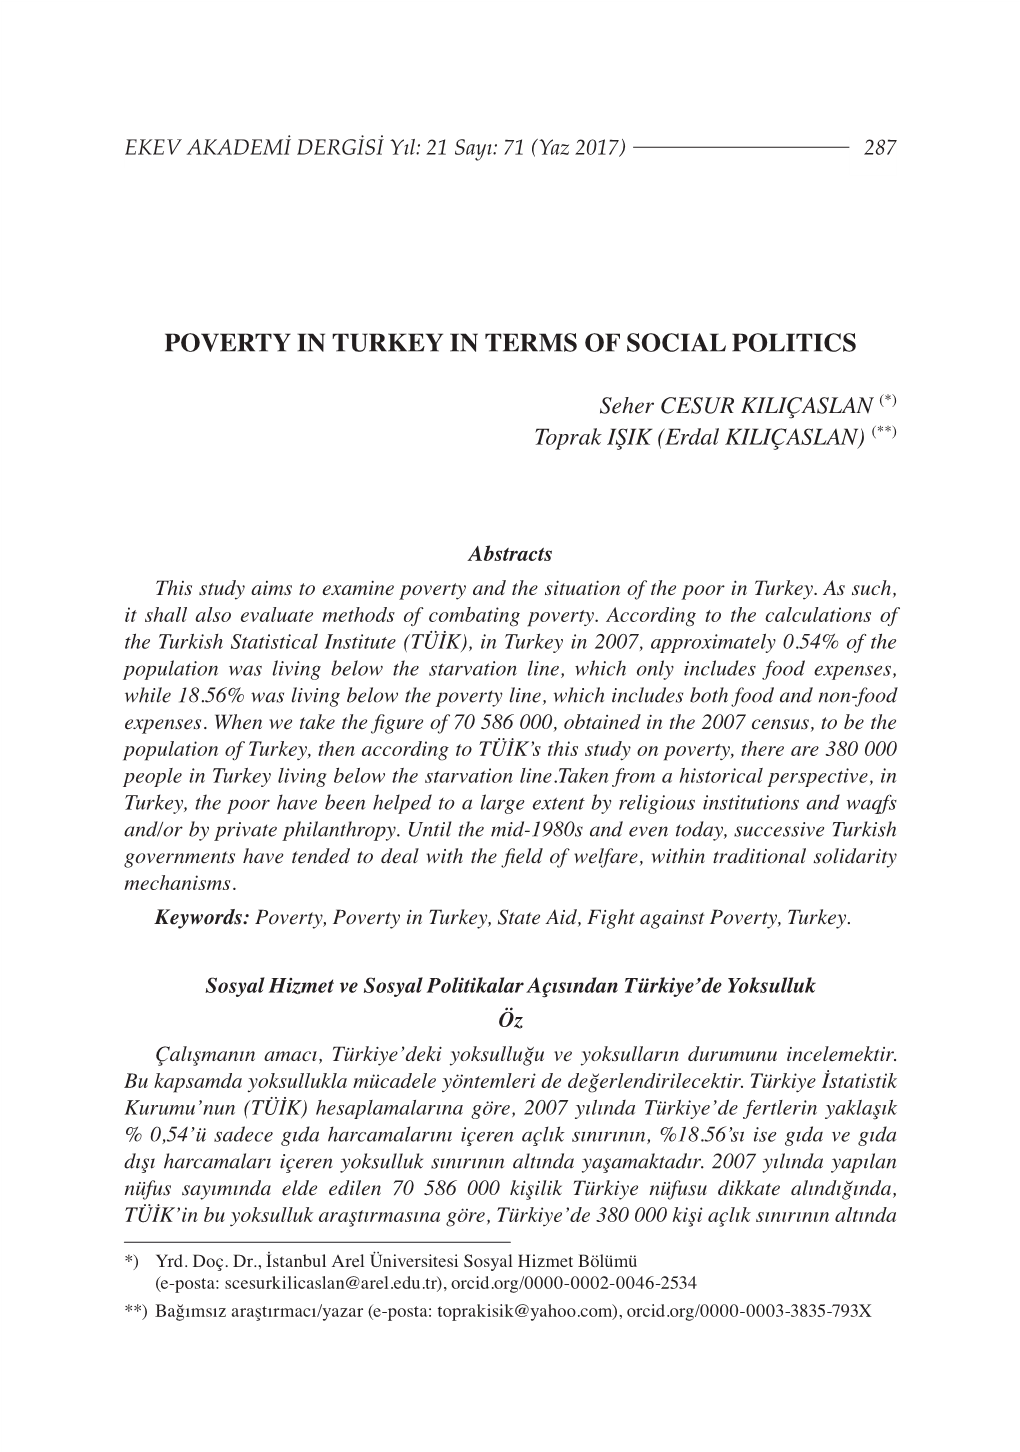 Poverty in Turkey in Terms of Social Politics